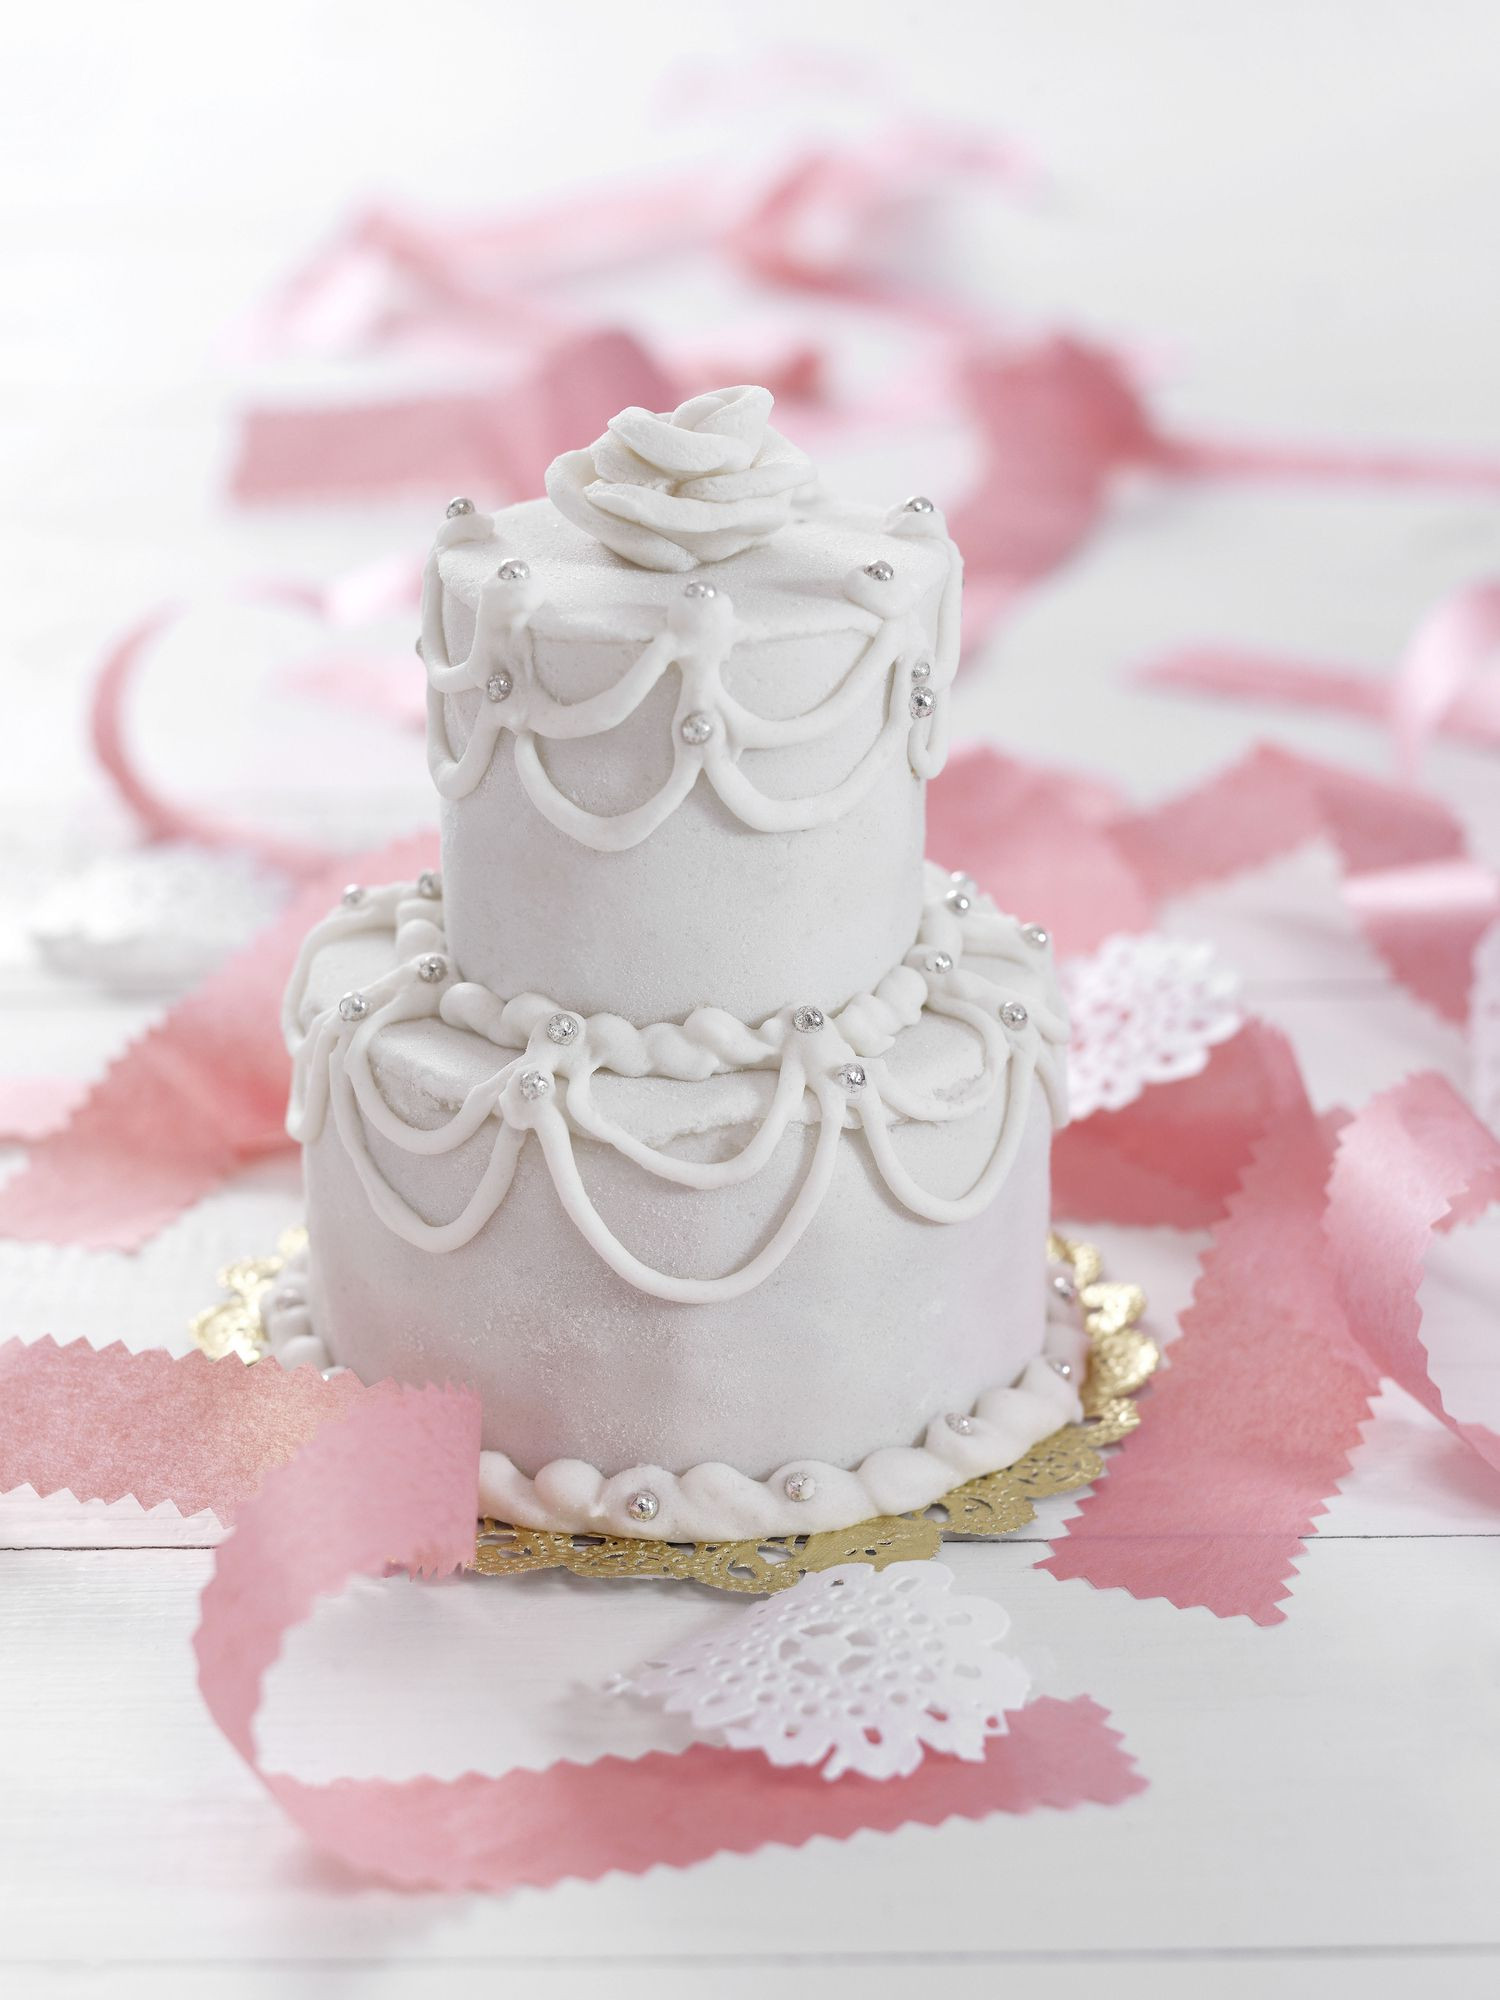 Make Wedding Cakes
 How to Make a Wedding Cake a Beginner s Guide